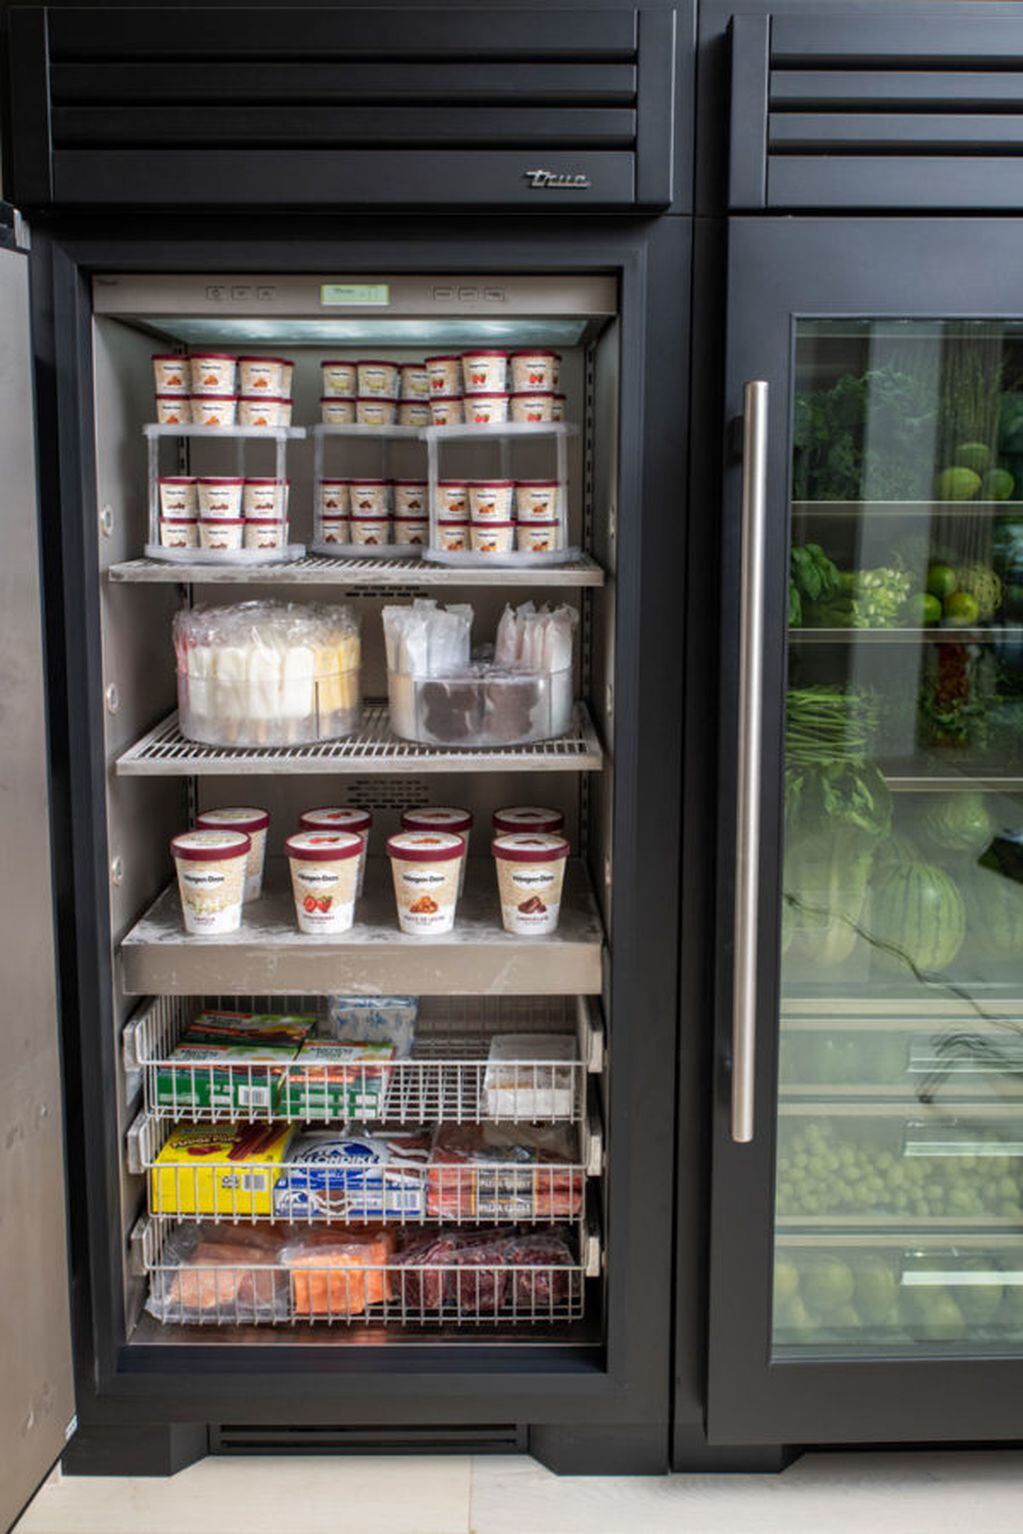 El freezer de Kris Jenner está repleto de helados.
@ivansocal